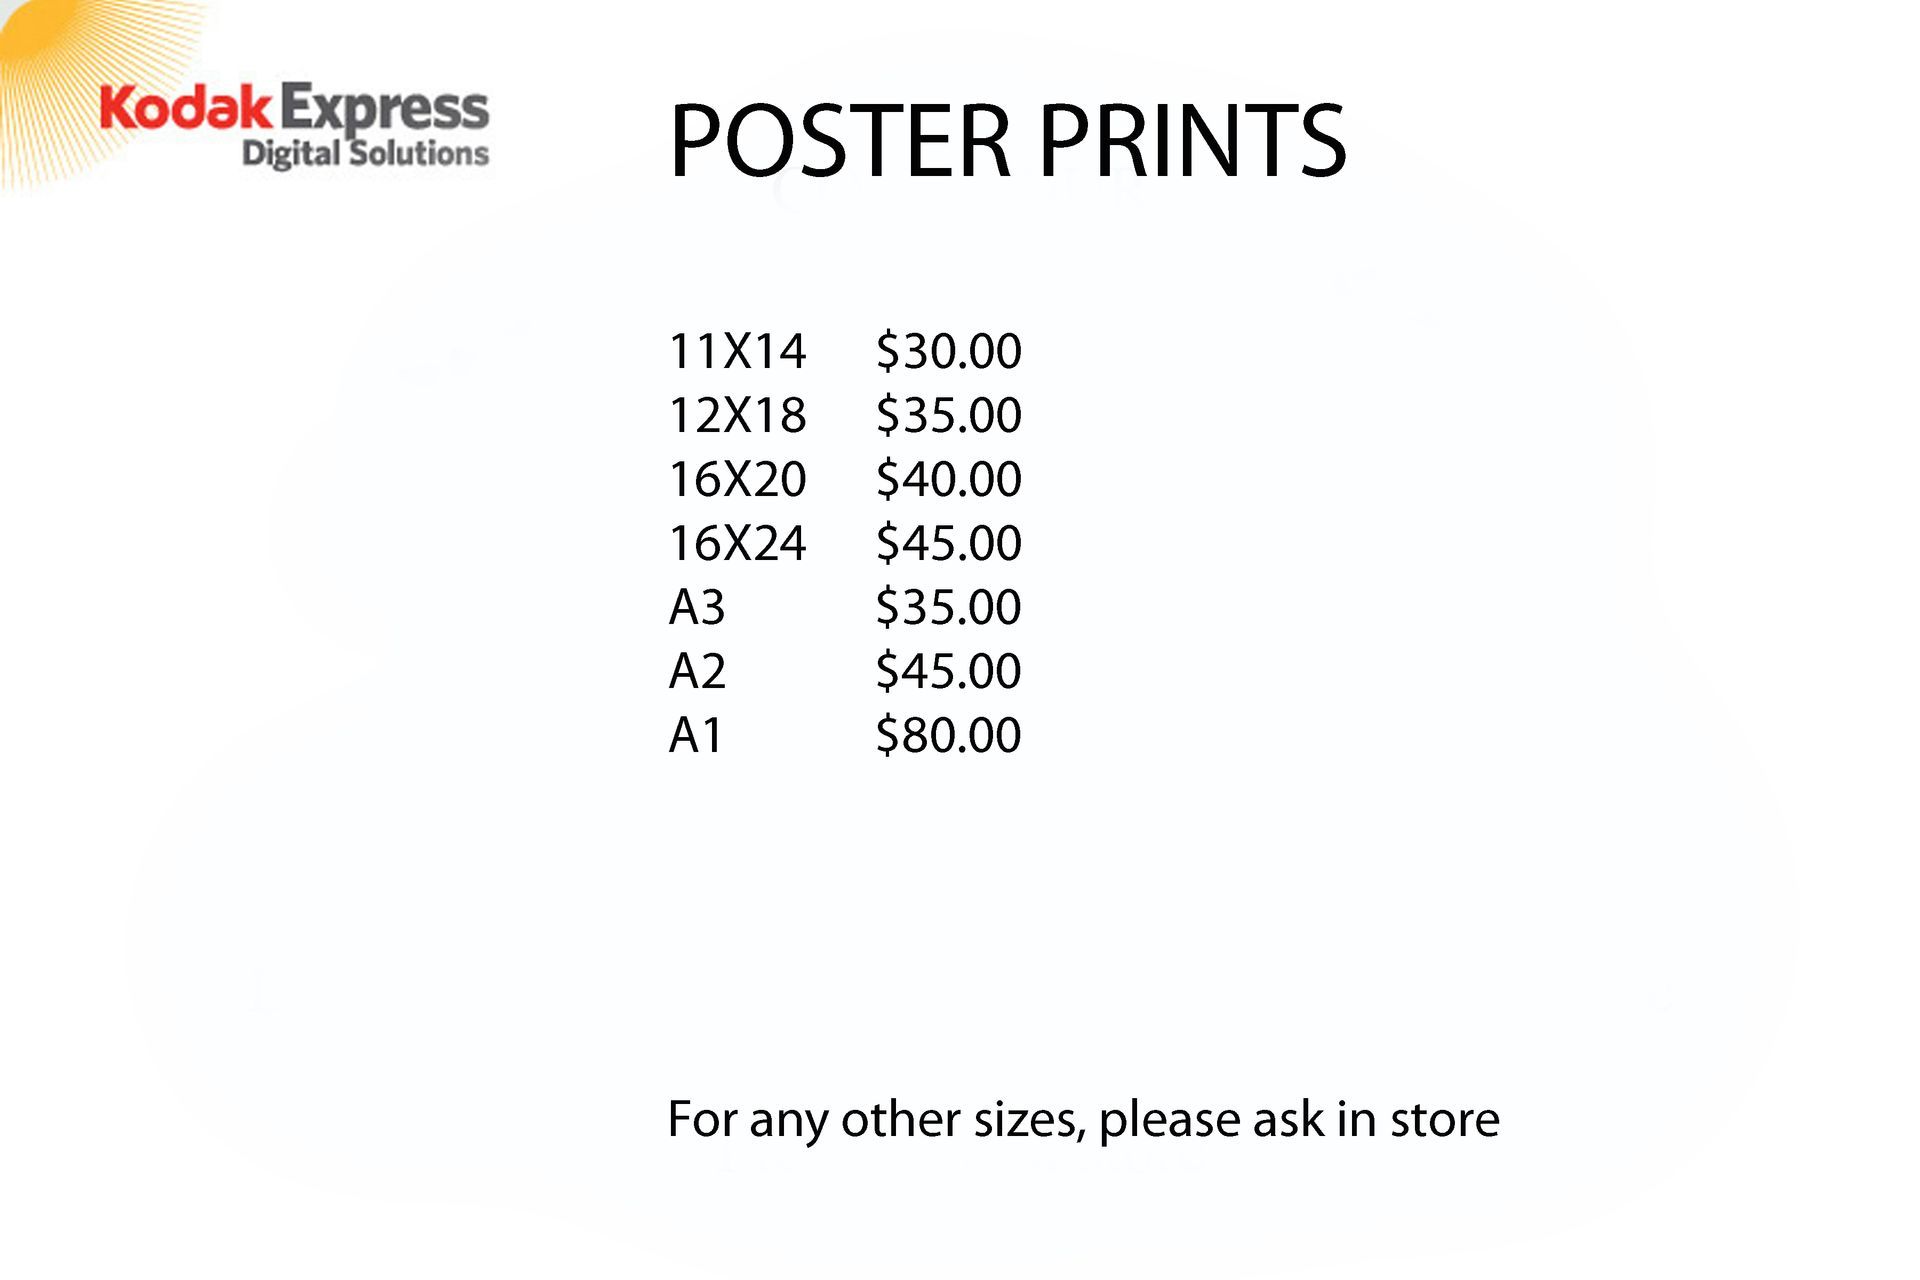 Kodak Express Digital Solutions' rate list for Poster Prints